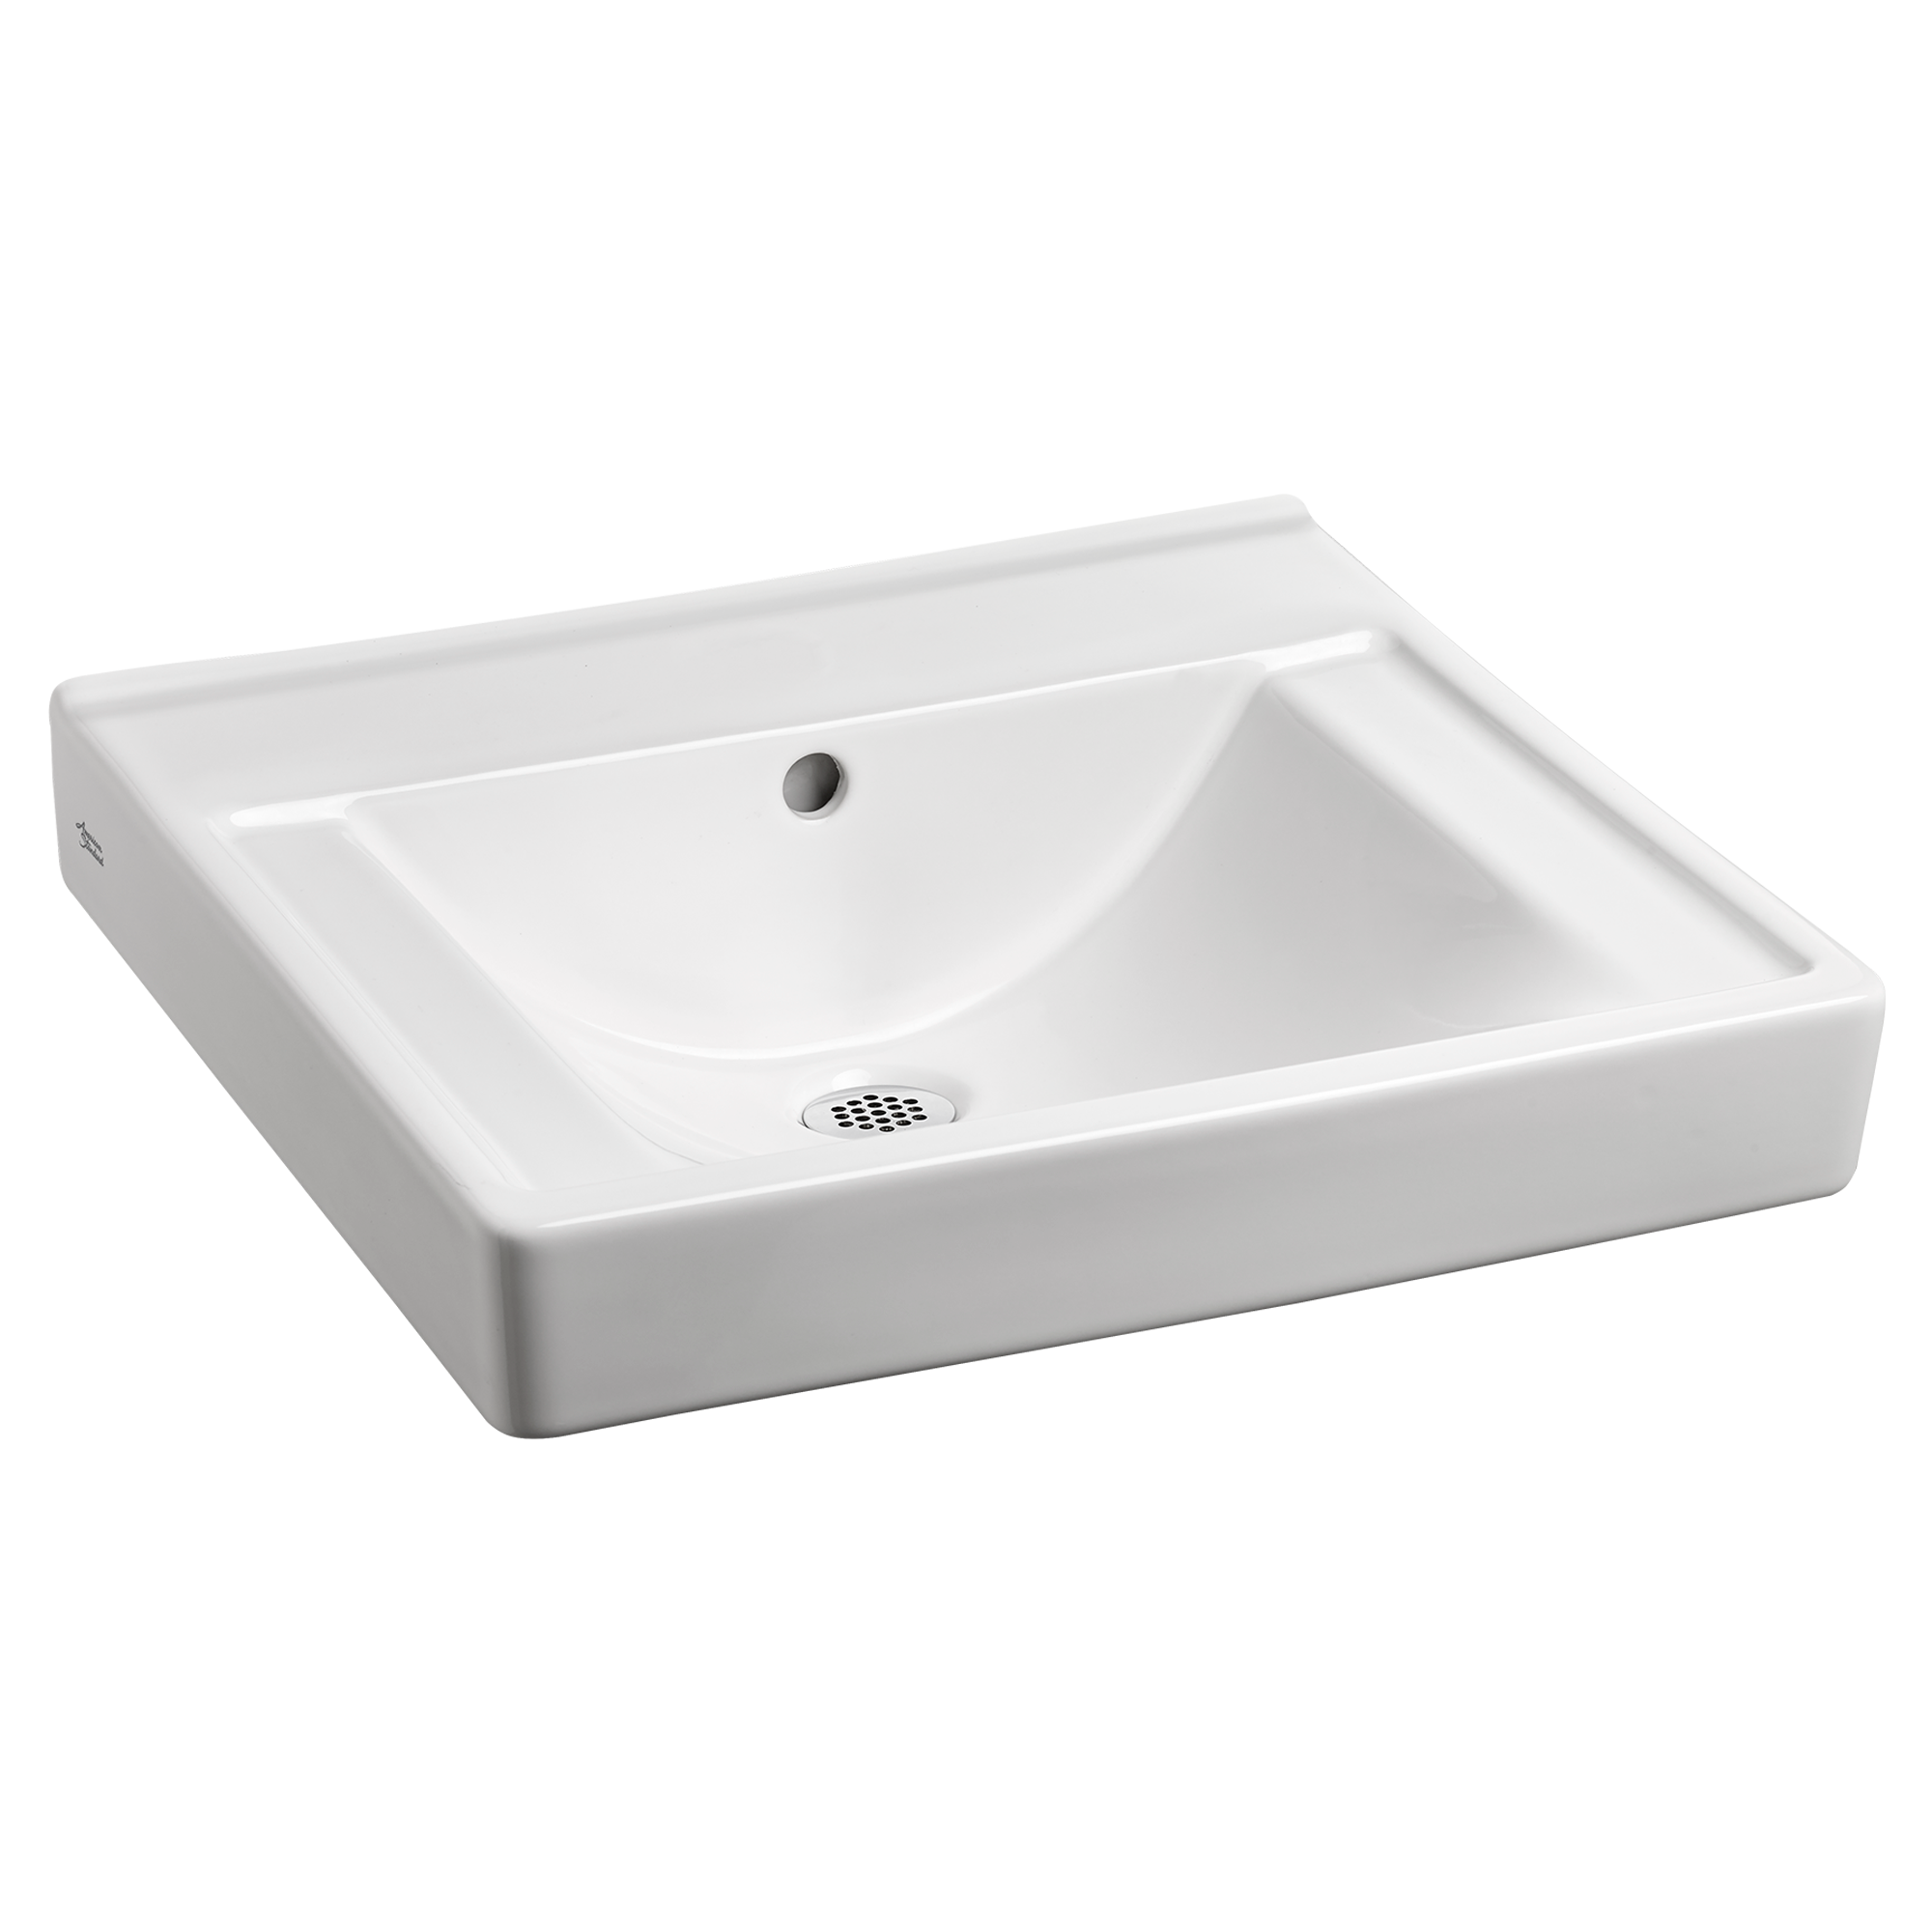 Bathroom Tap Ceramic Standard American Sink Brands Clipart